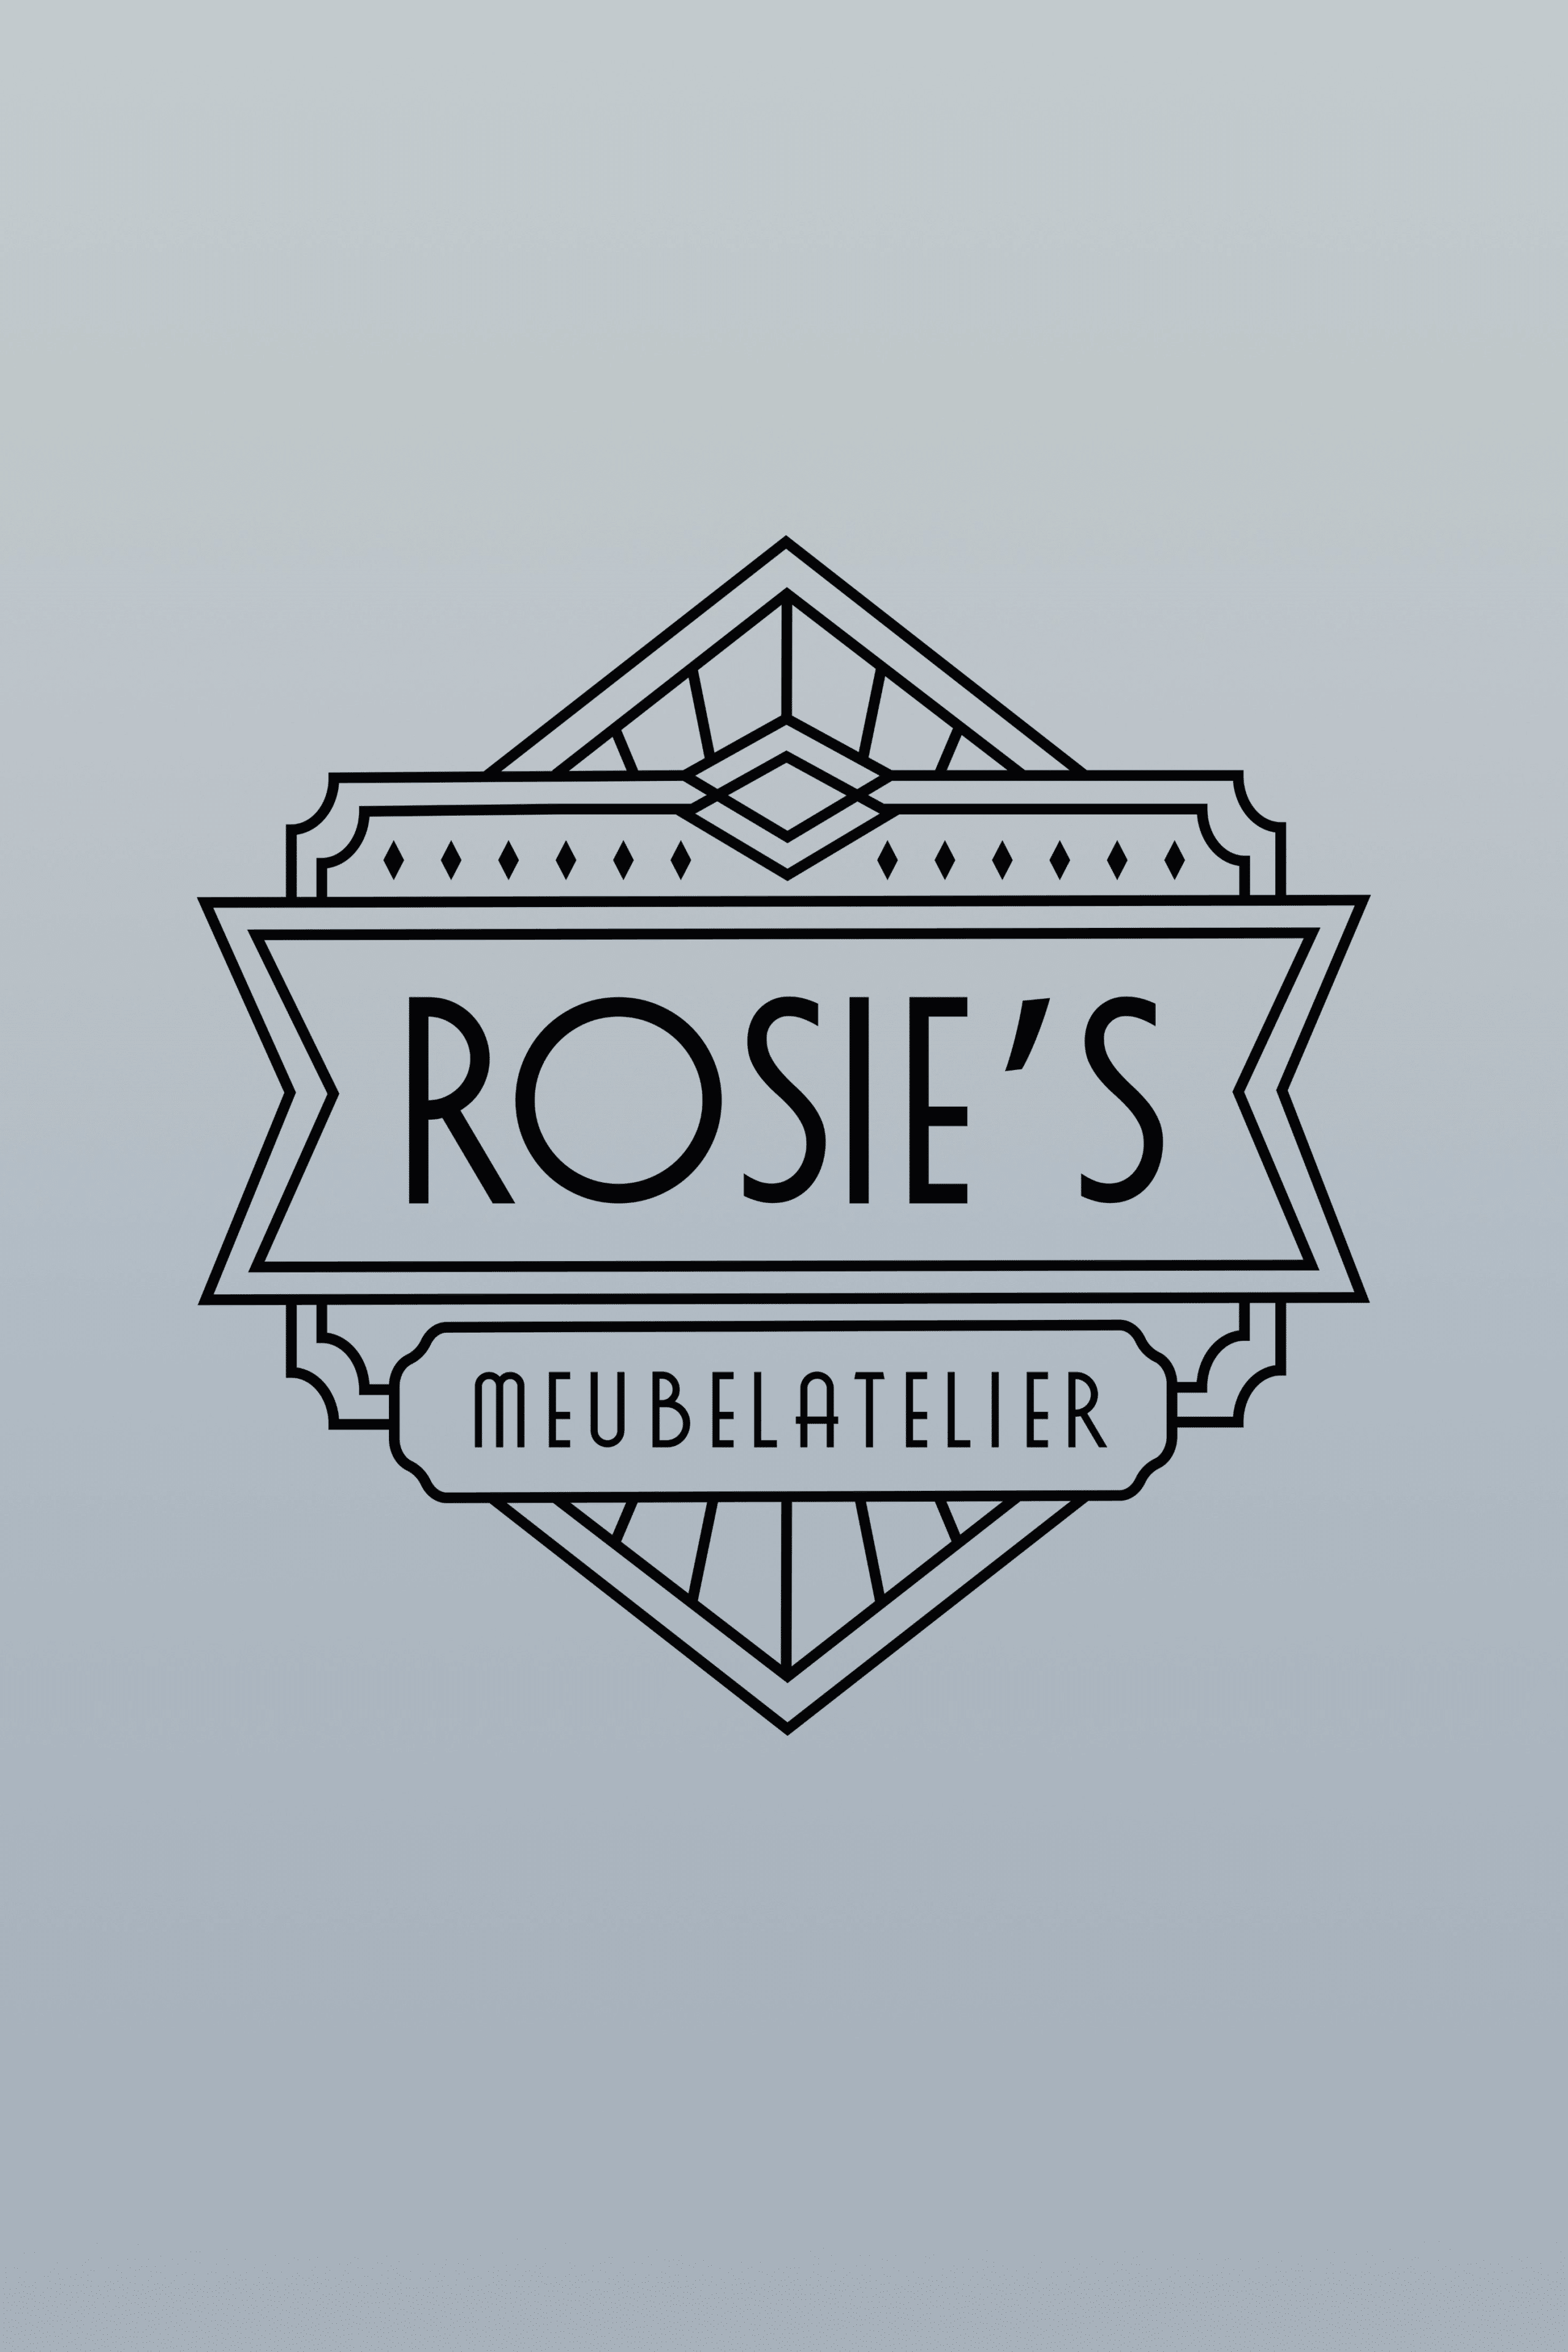 Rosie’s Meubelatelier